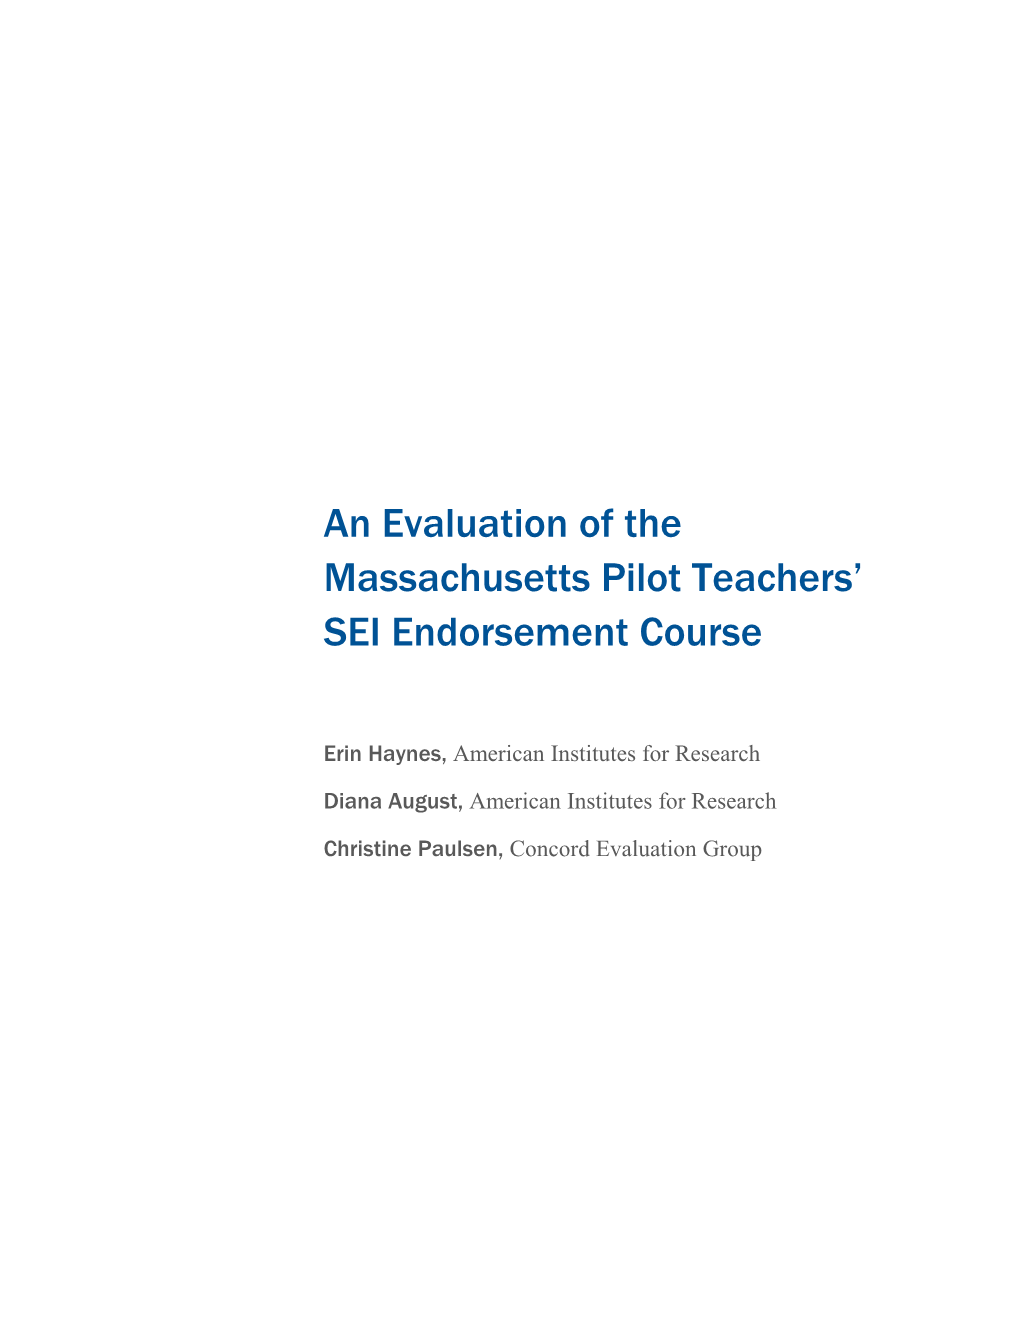 SEI Endorsement Pilot Evaluation (December 2012)